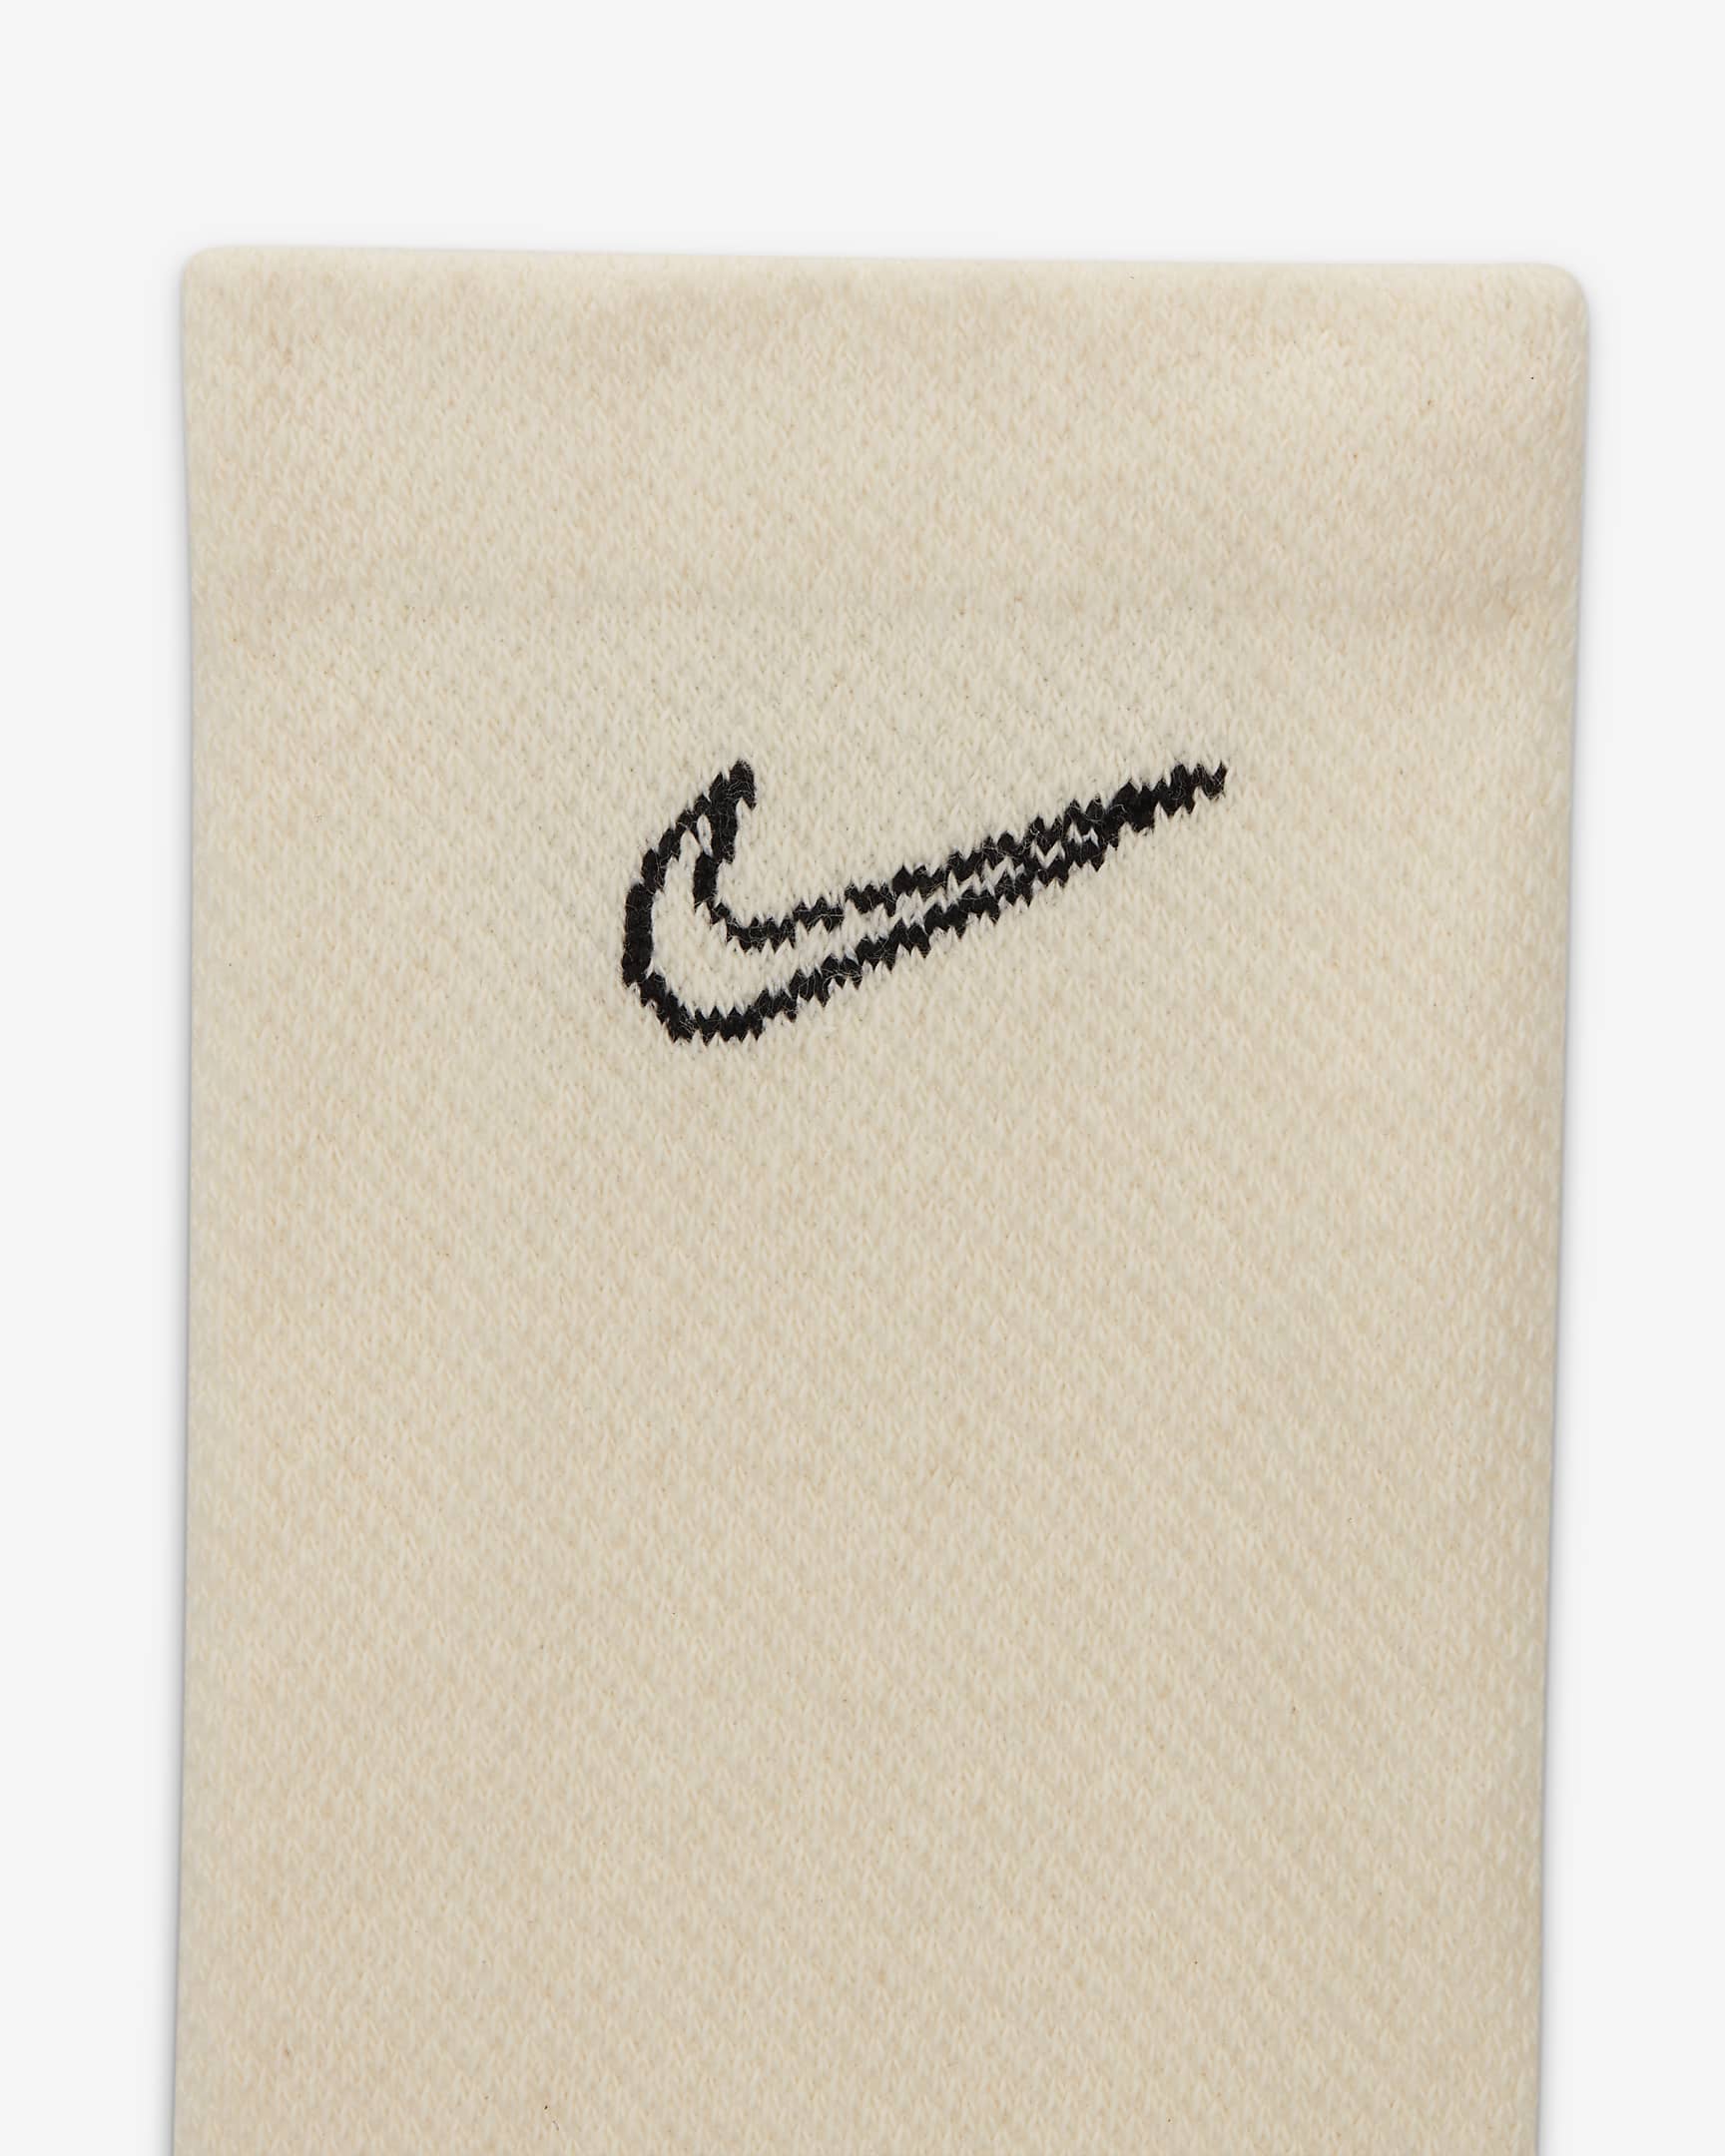 Nike Everyday Plus Cushioned Crew Socks (2 Pairs). Nike ID